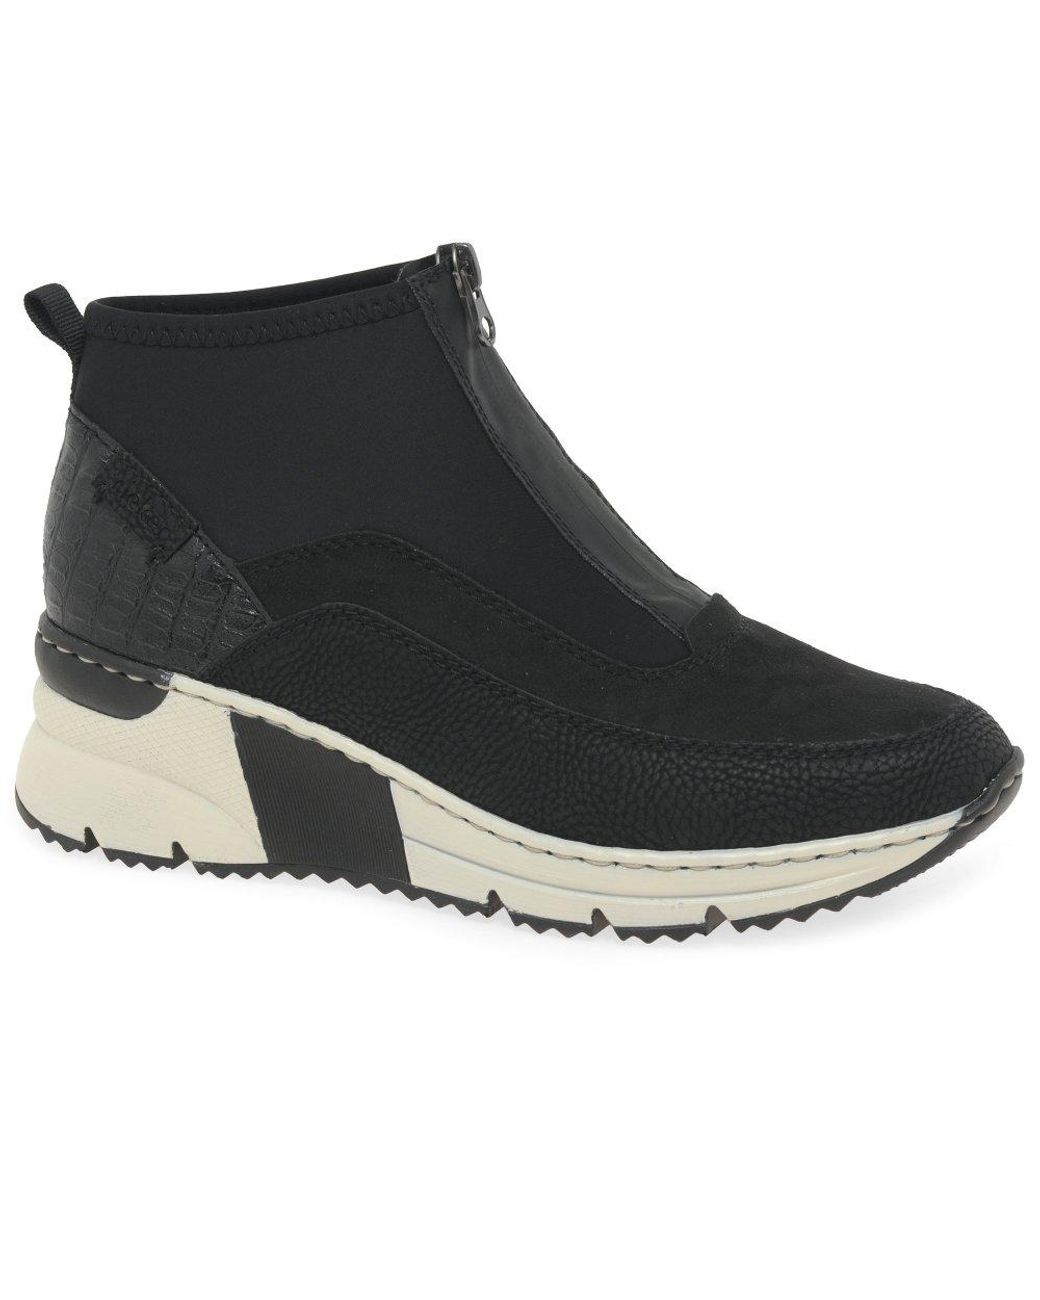 Rieker Greece Ankle Boots in Black | Lyst Canada